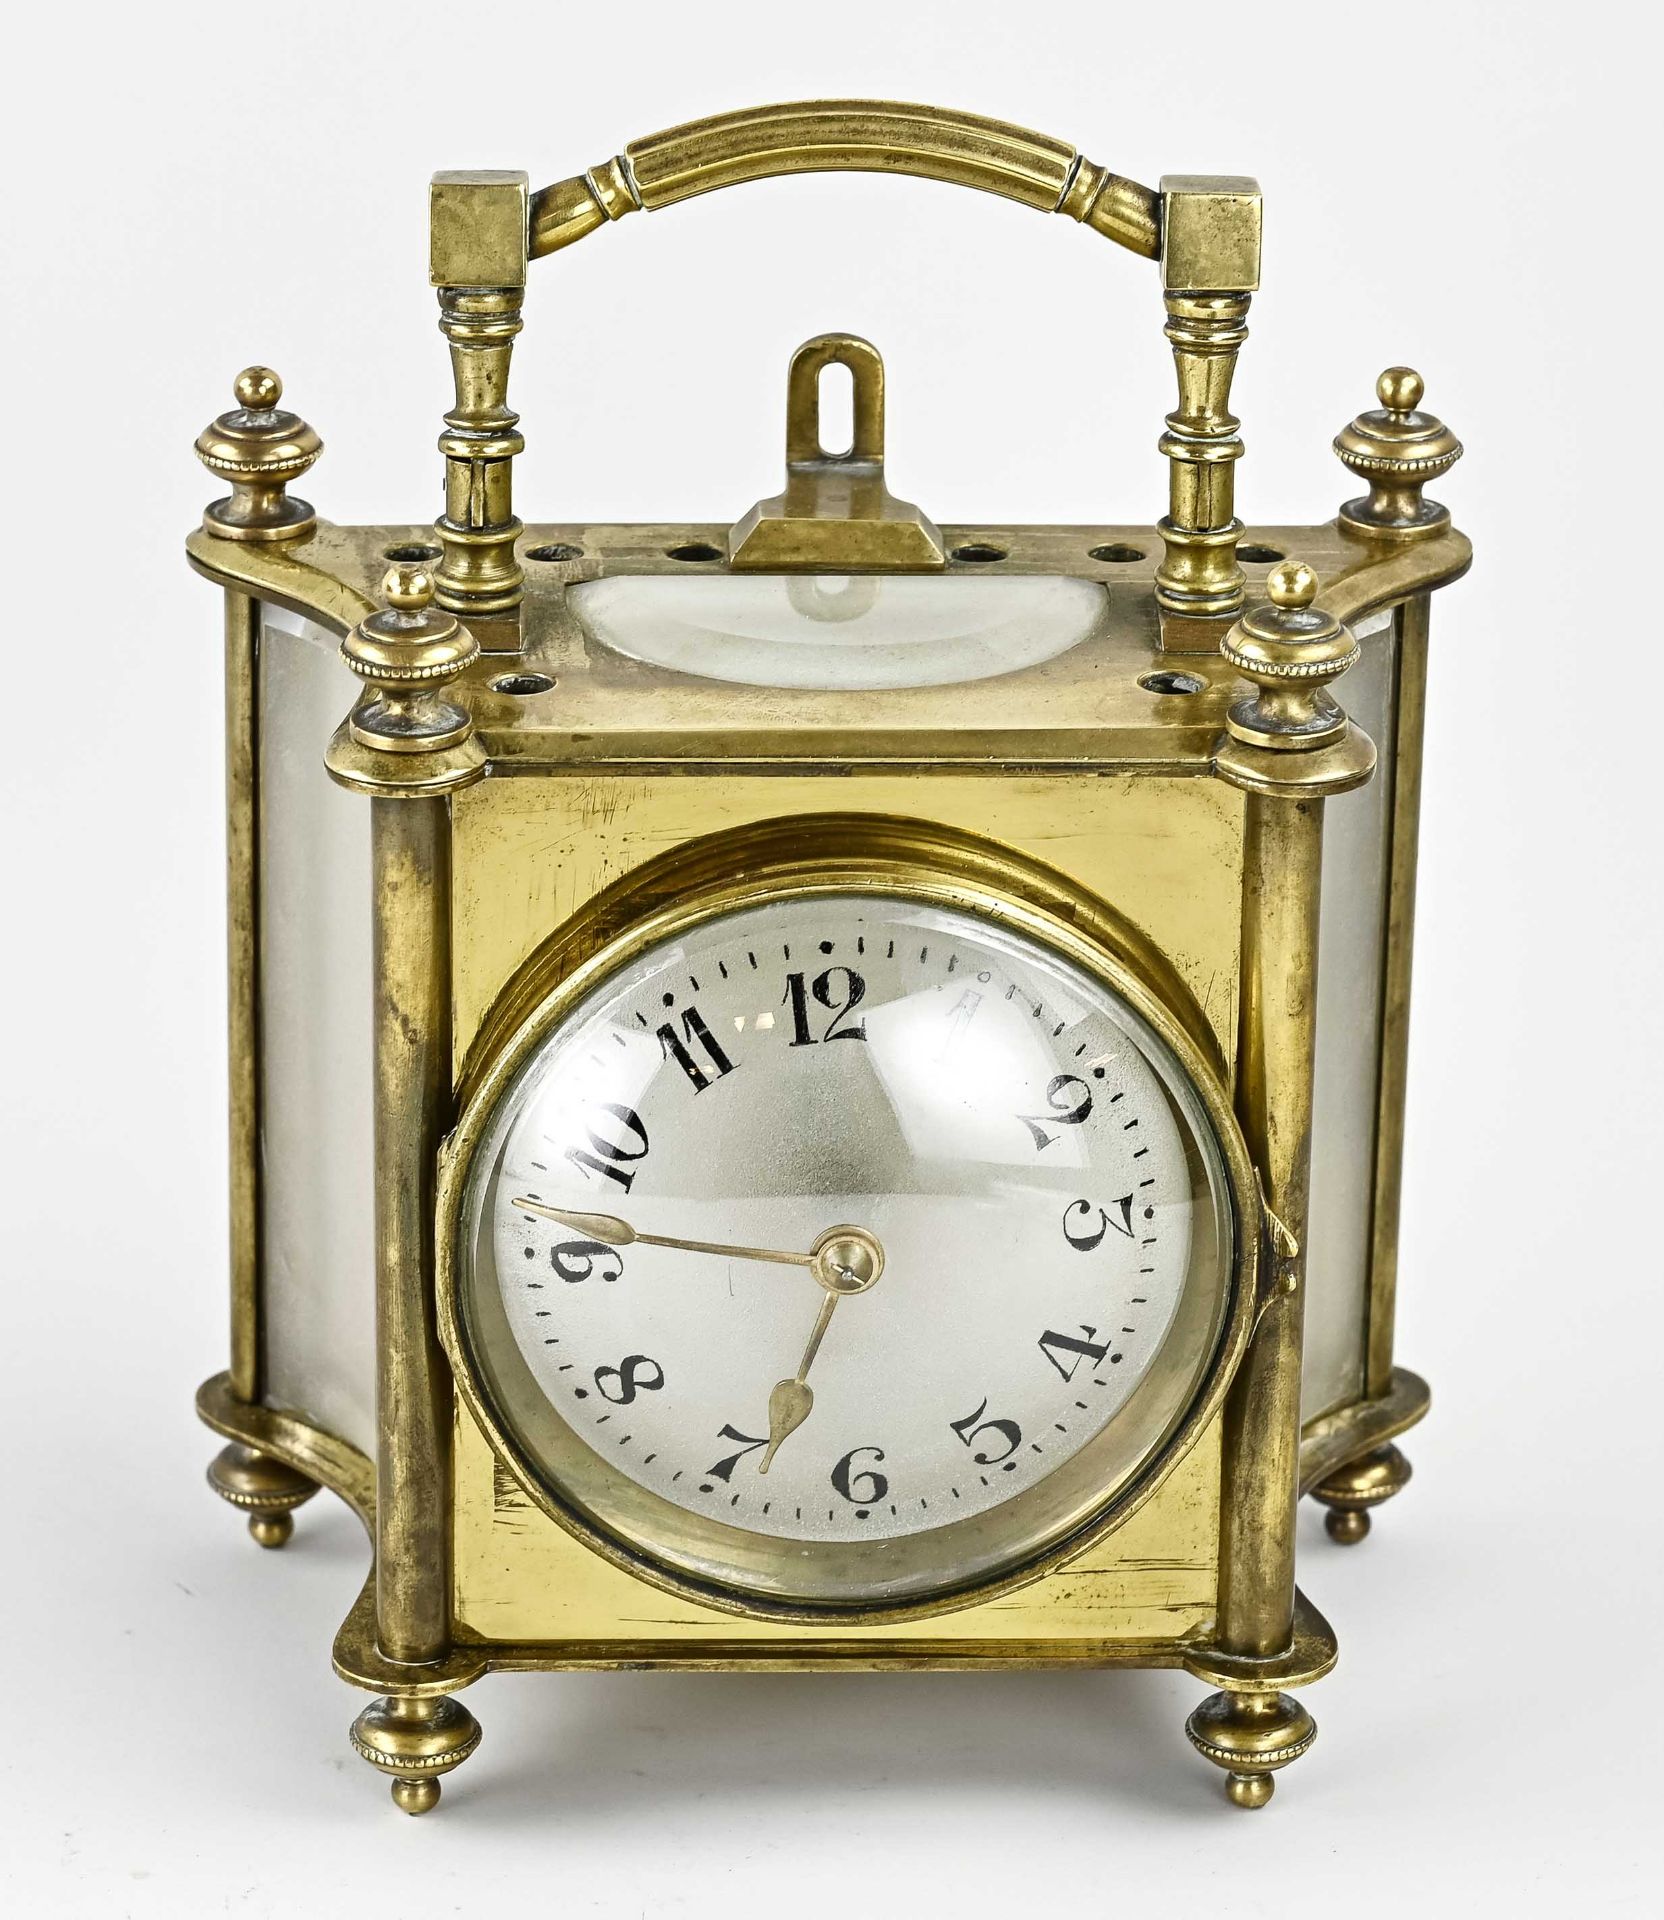 Antique ship clock for night light